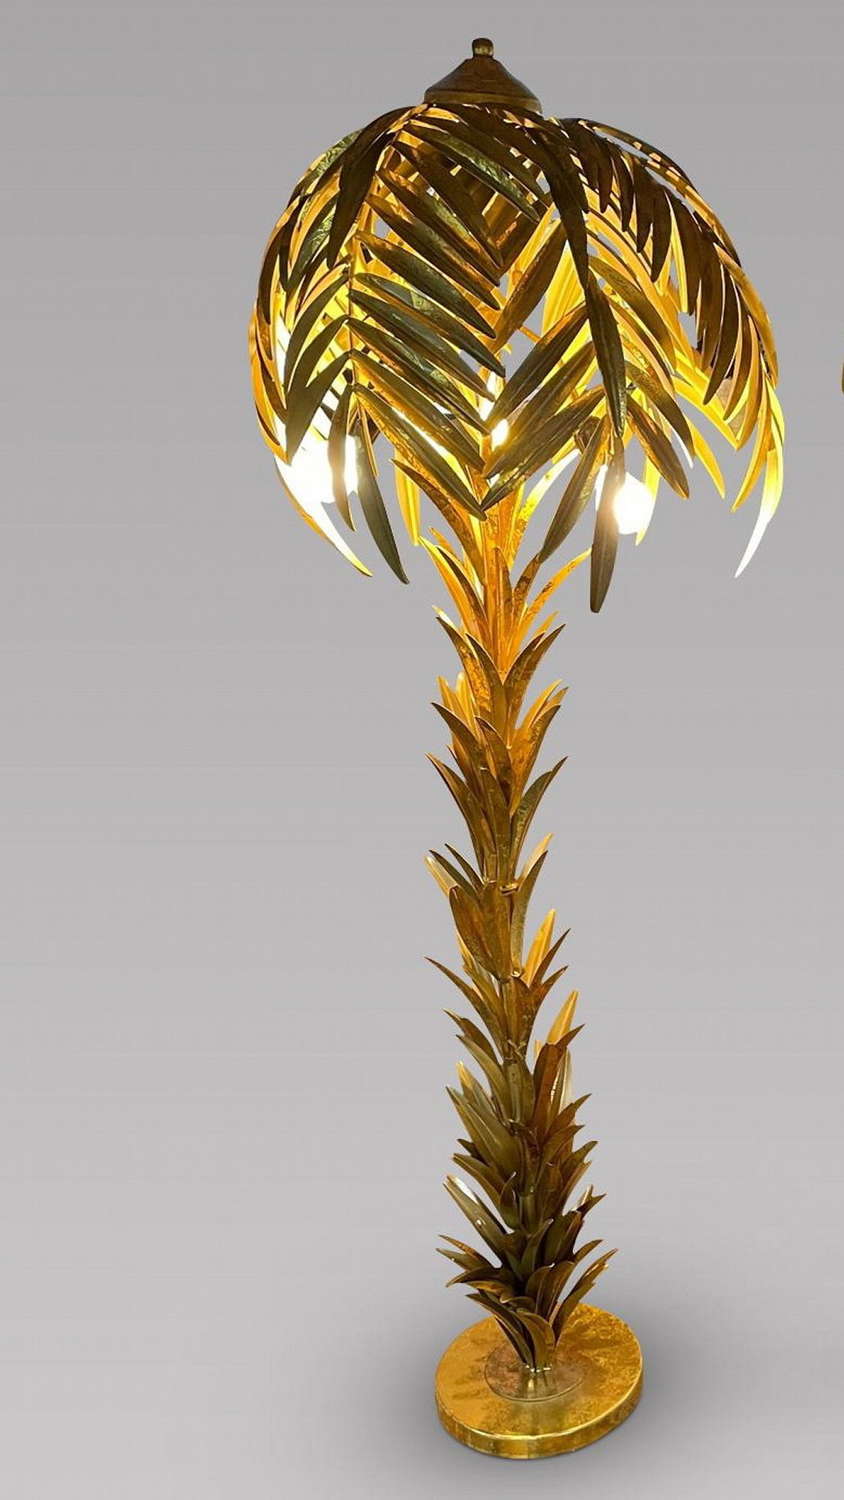 A Highly Decorative Palm Tree Standard Light